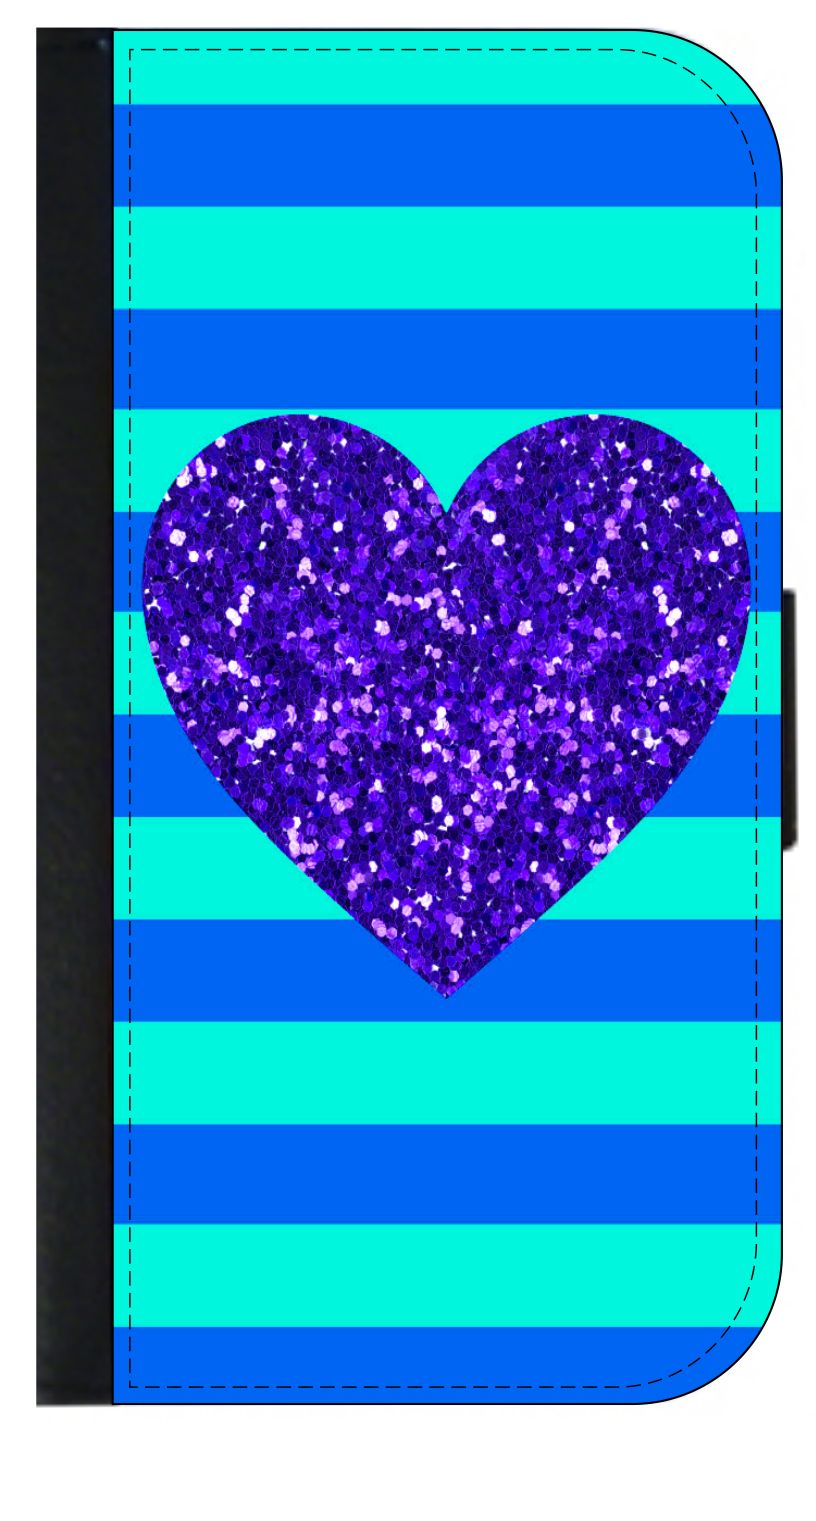 Purple Faux Glitter Heart on Stripes - Galaxy s10p Case - Galaxy s10 Plus Case - Galaxy s10 Plus Wallet Case - s10 Plus Case Wallet - Galaxy s10 Plus Case Wallet - s10 Plus Case Flip Cover - image 1 of 3